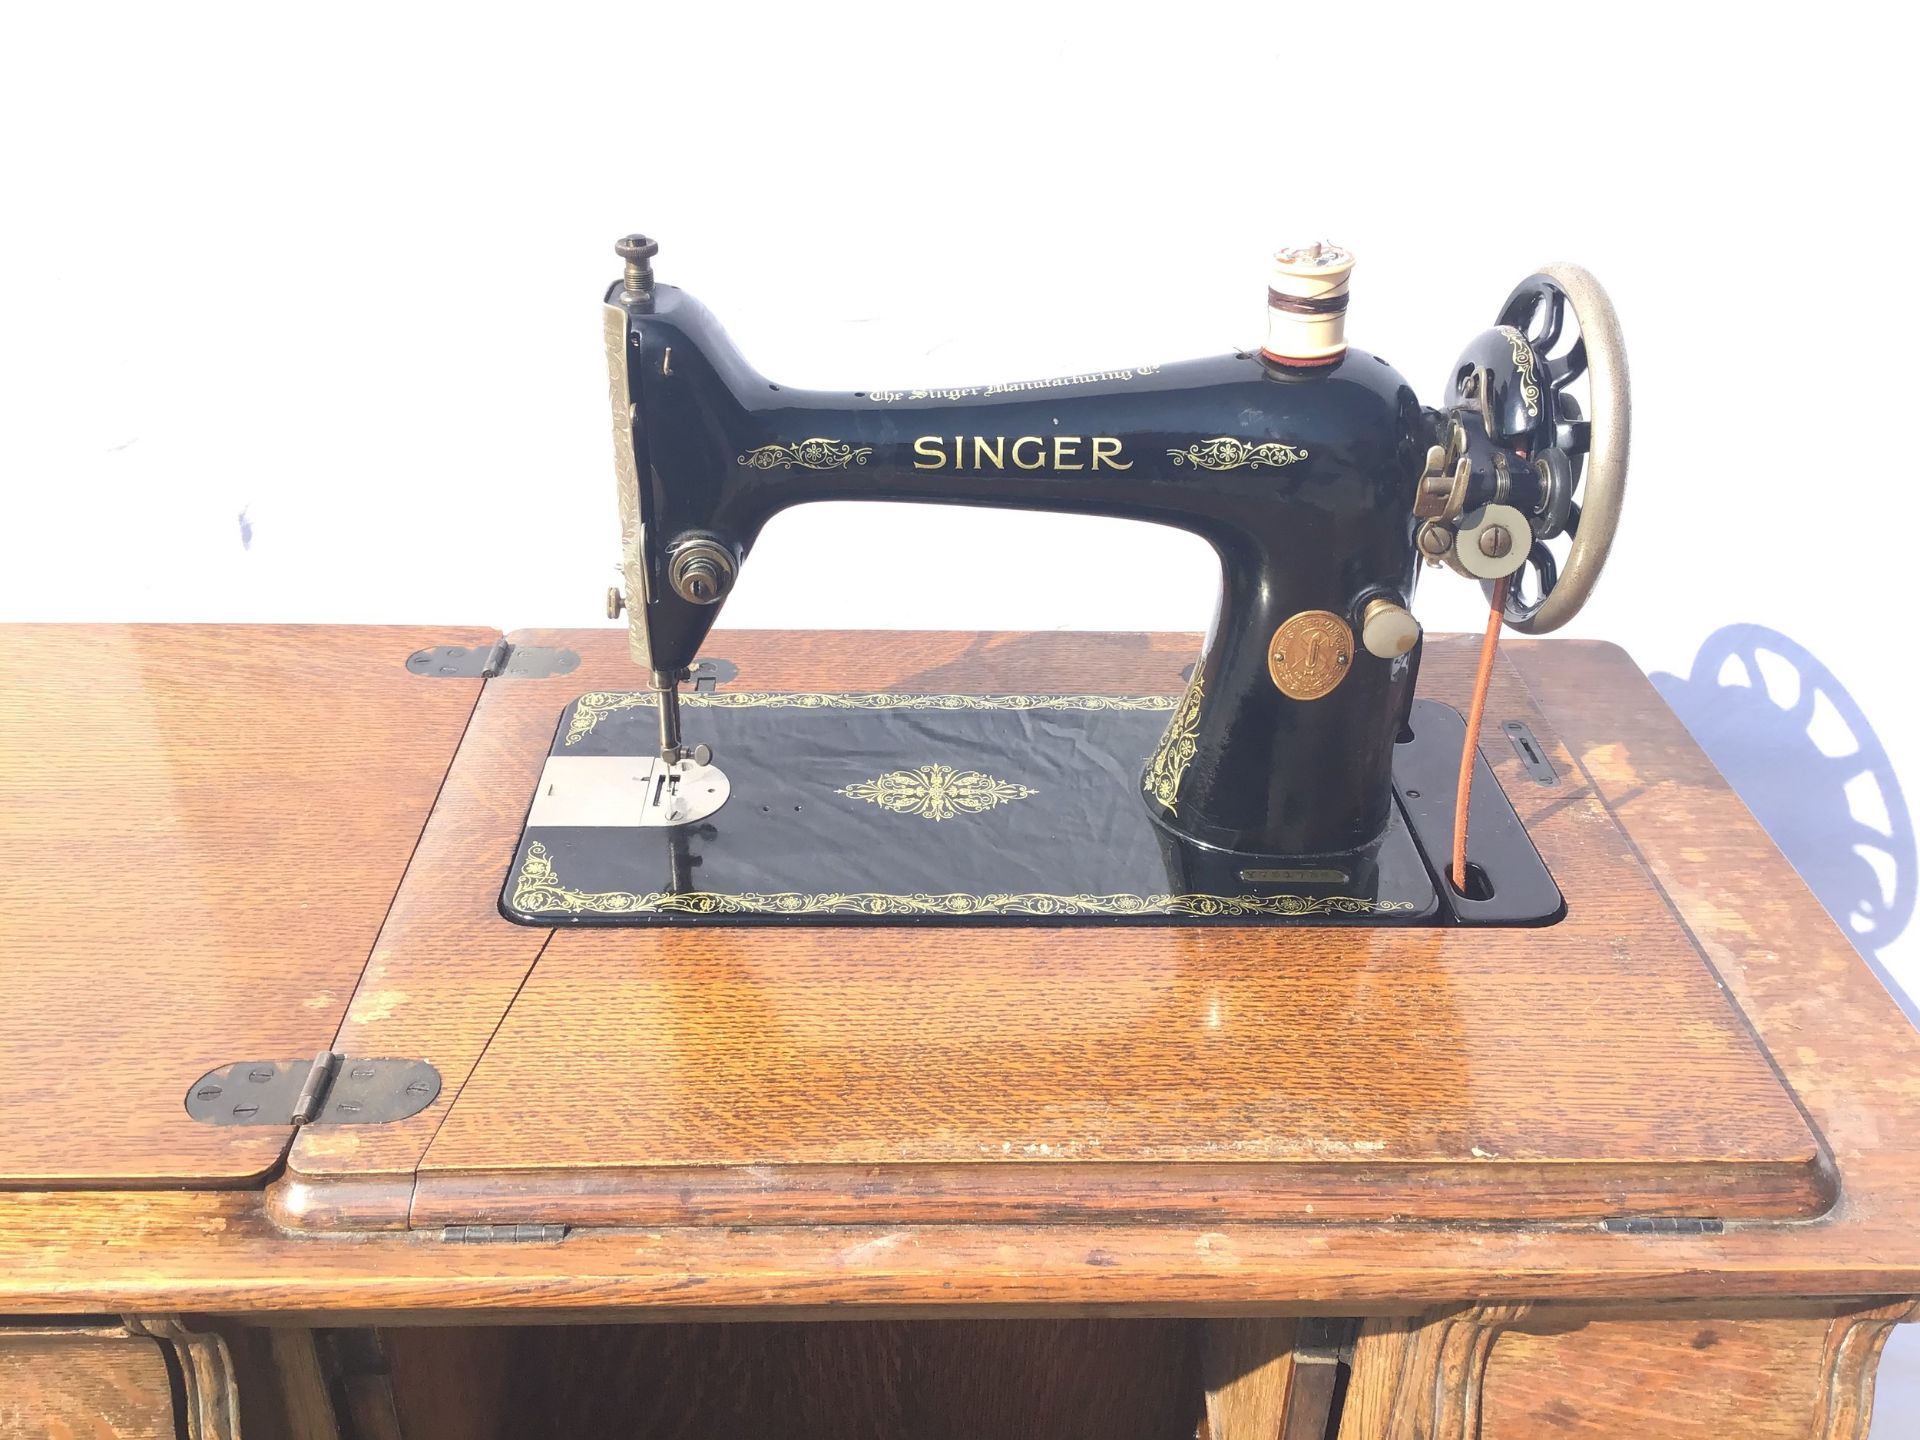 Vintage Singer Y7517563 sewing machine in oak wood cabinet 81x80x43cms. - Image 2 of 6